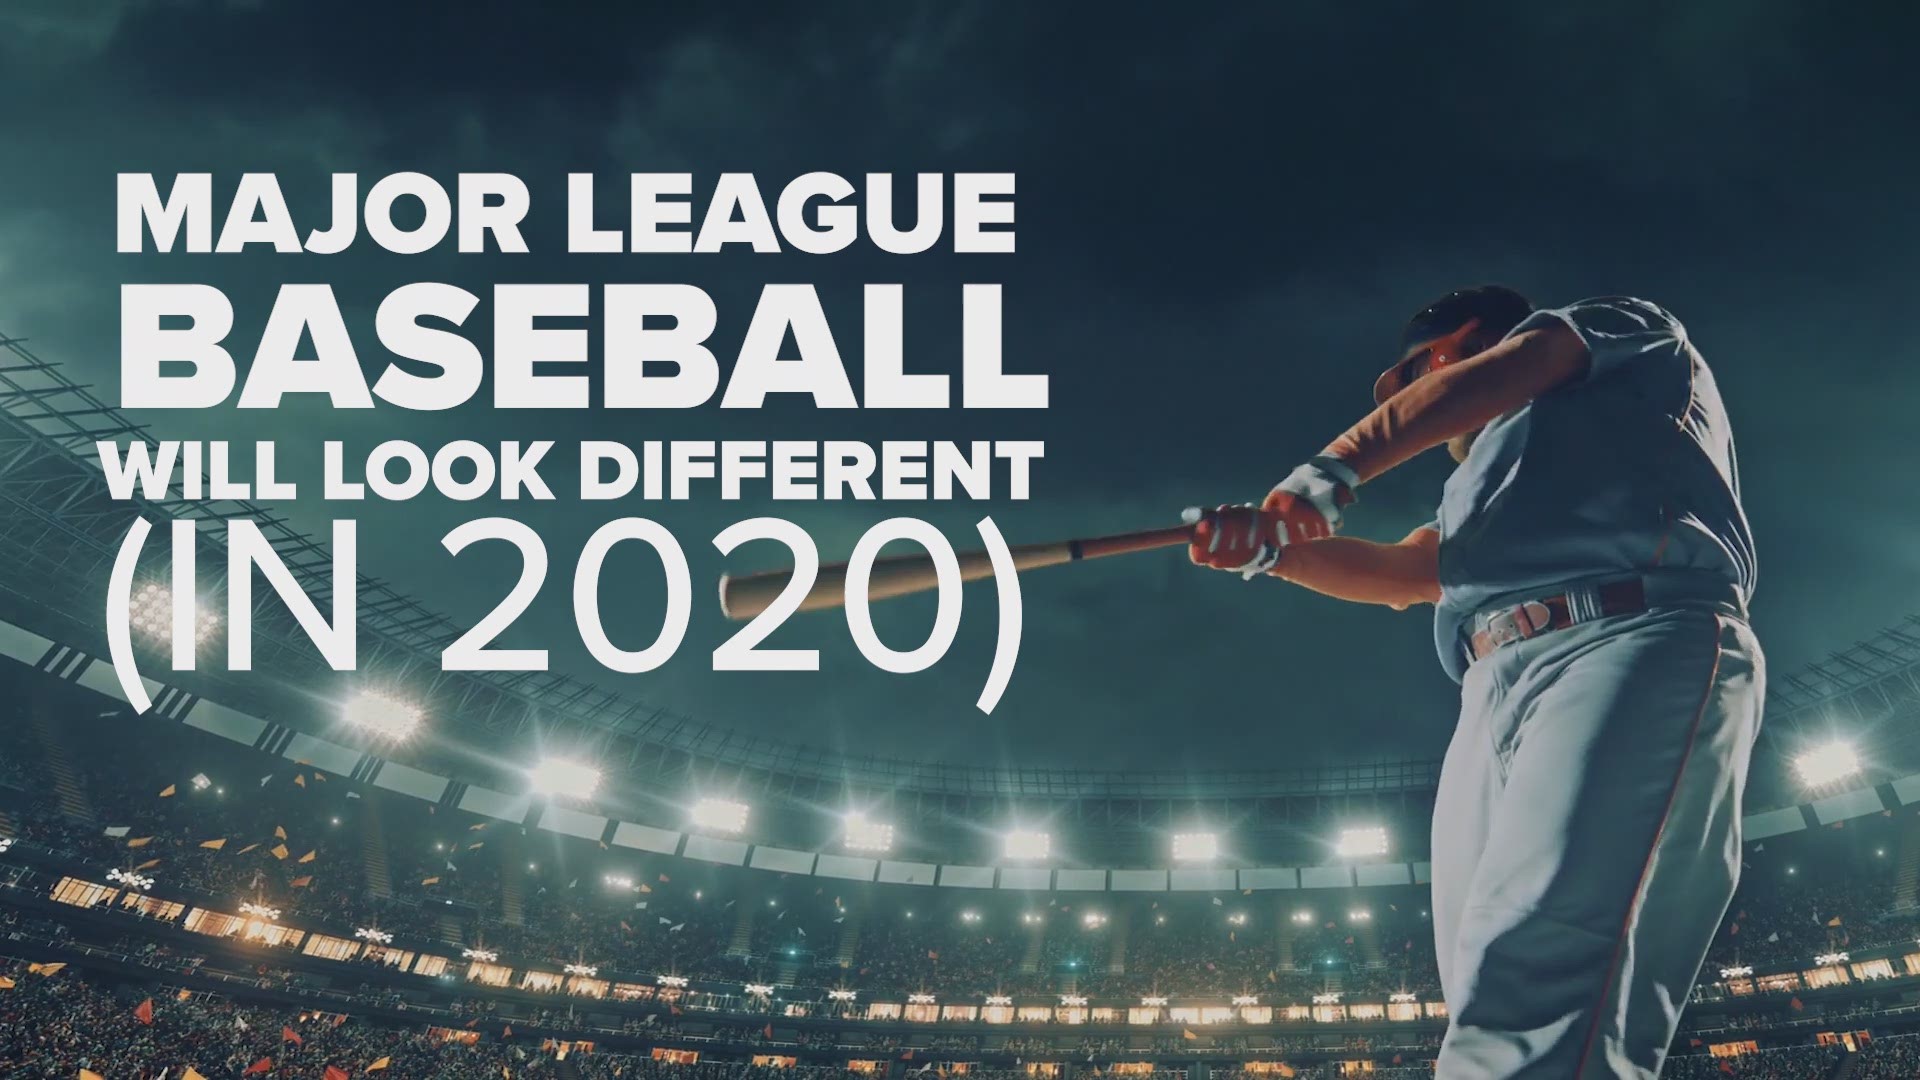 Mlb Postseason Bubble Plan Puts World Series In Arlington Texas Wfaa Com